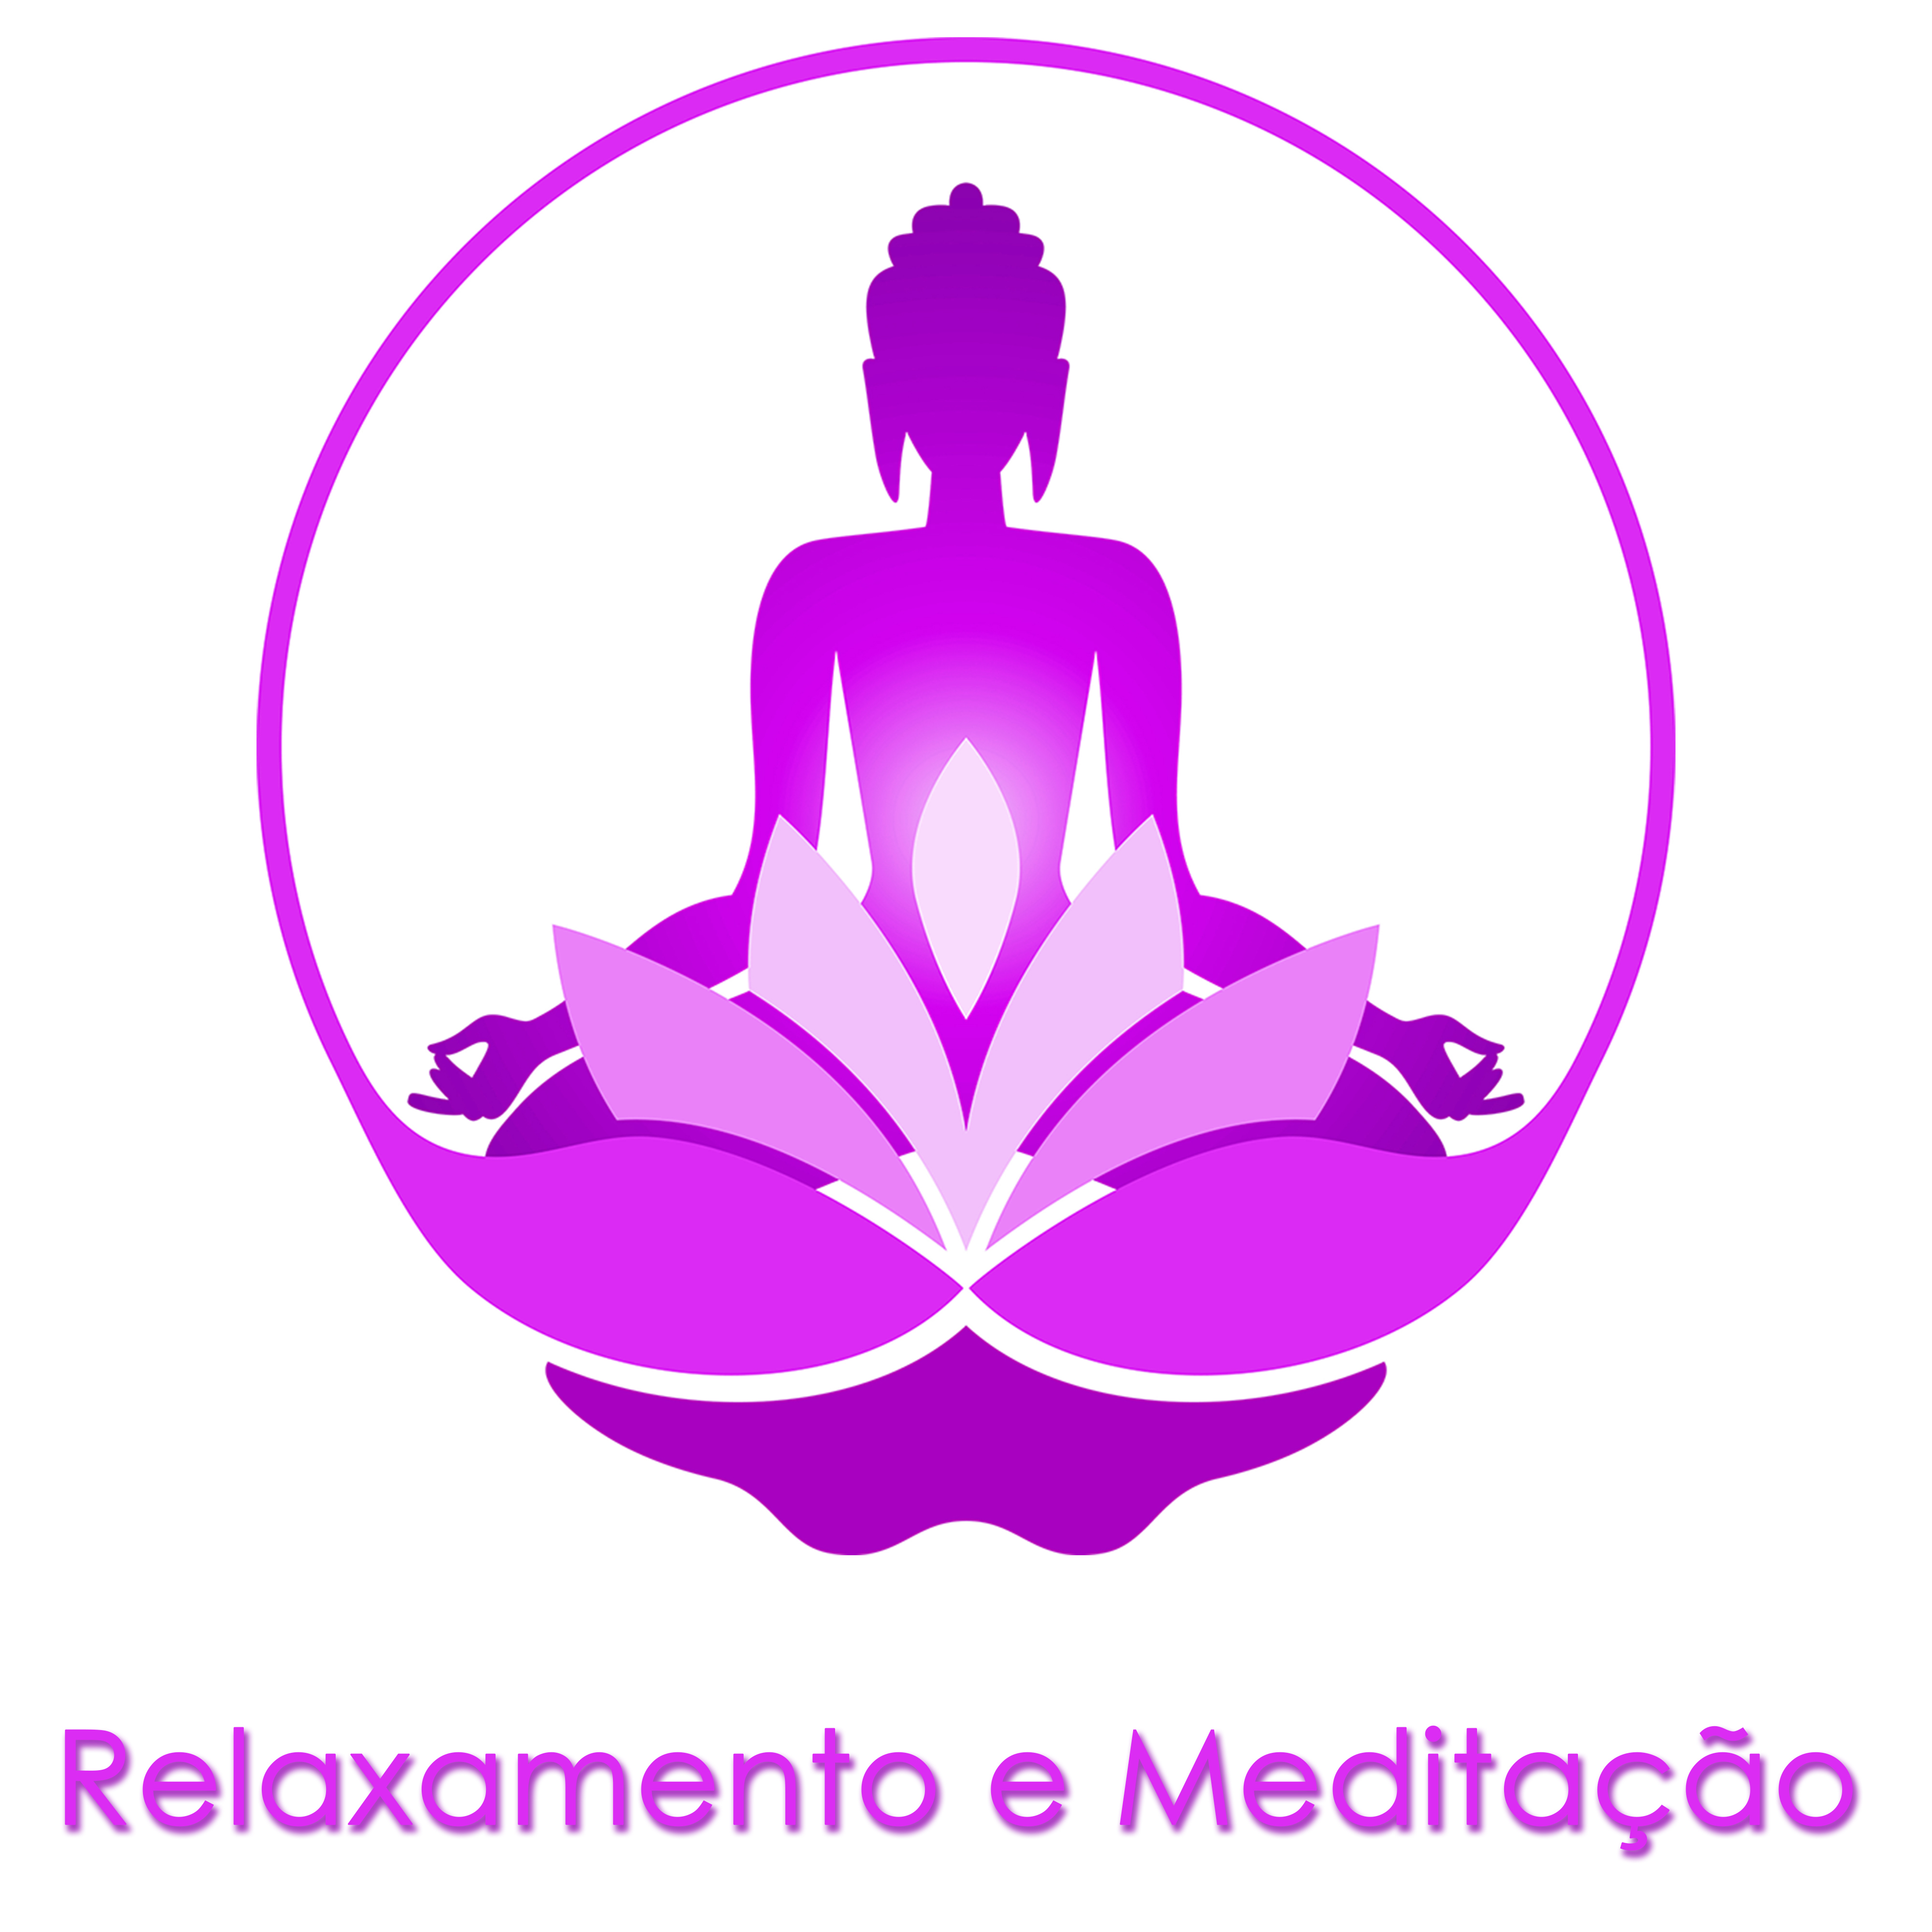 Relaxamento e Medita o  Espiritualidade New Age para Yoga e Relaxar a Mente, Mu sicas Lentas para Sono, Pensamento Positivo, Bem Estar e Serenidade